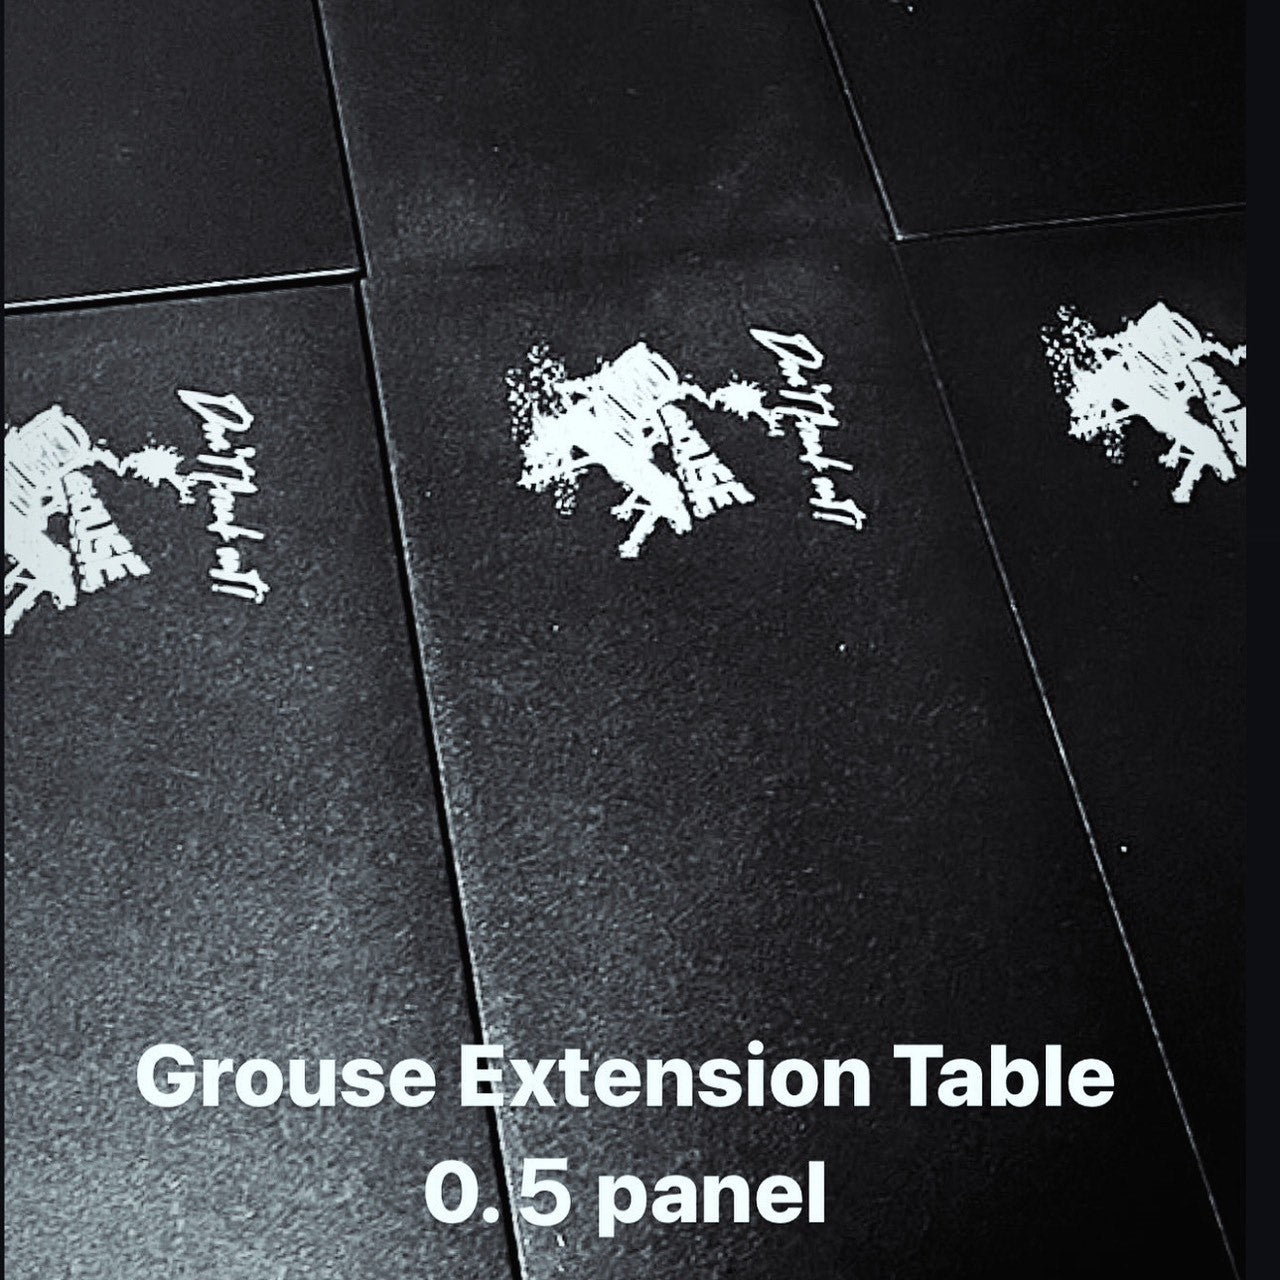 GROUSE TABLE SET